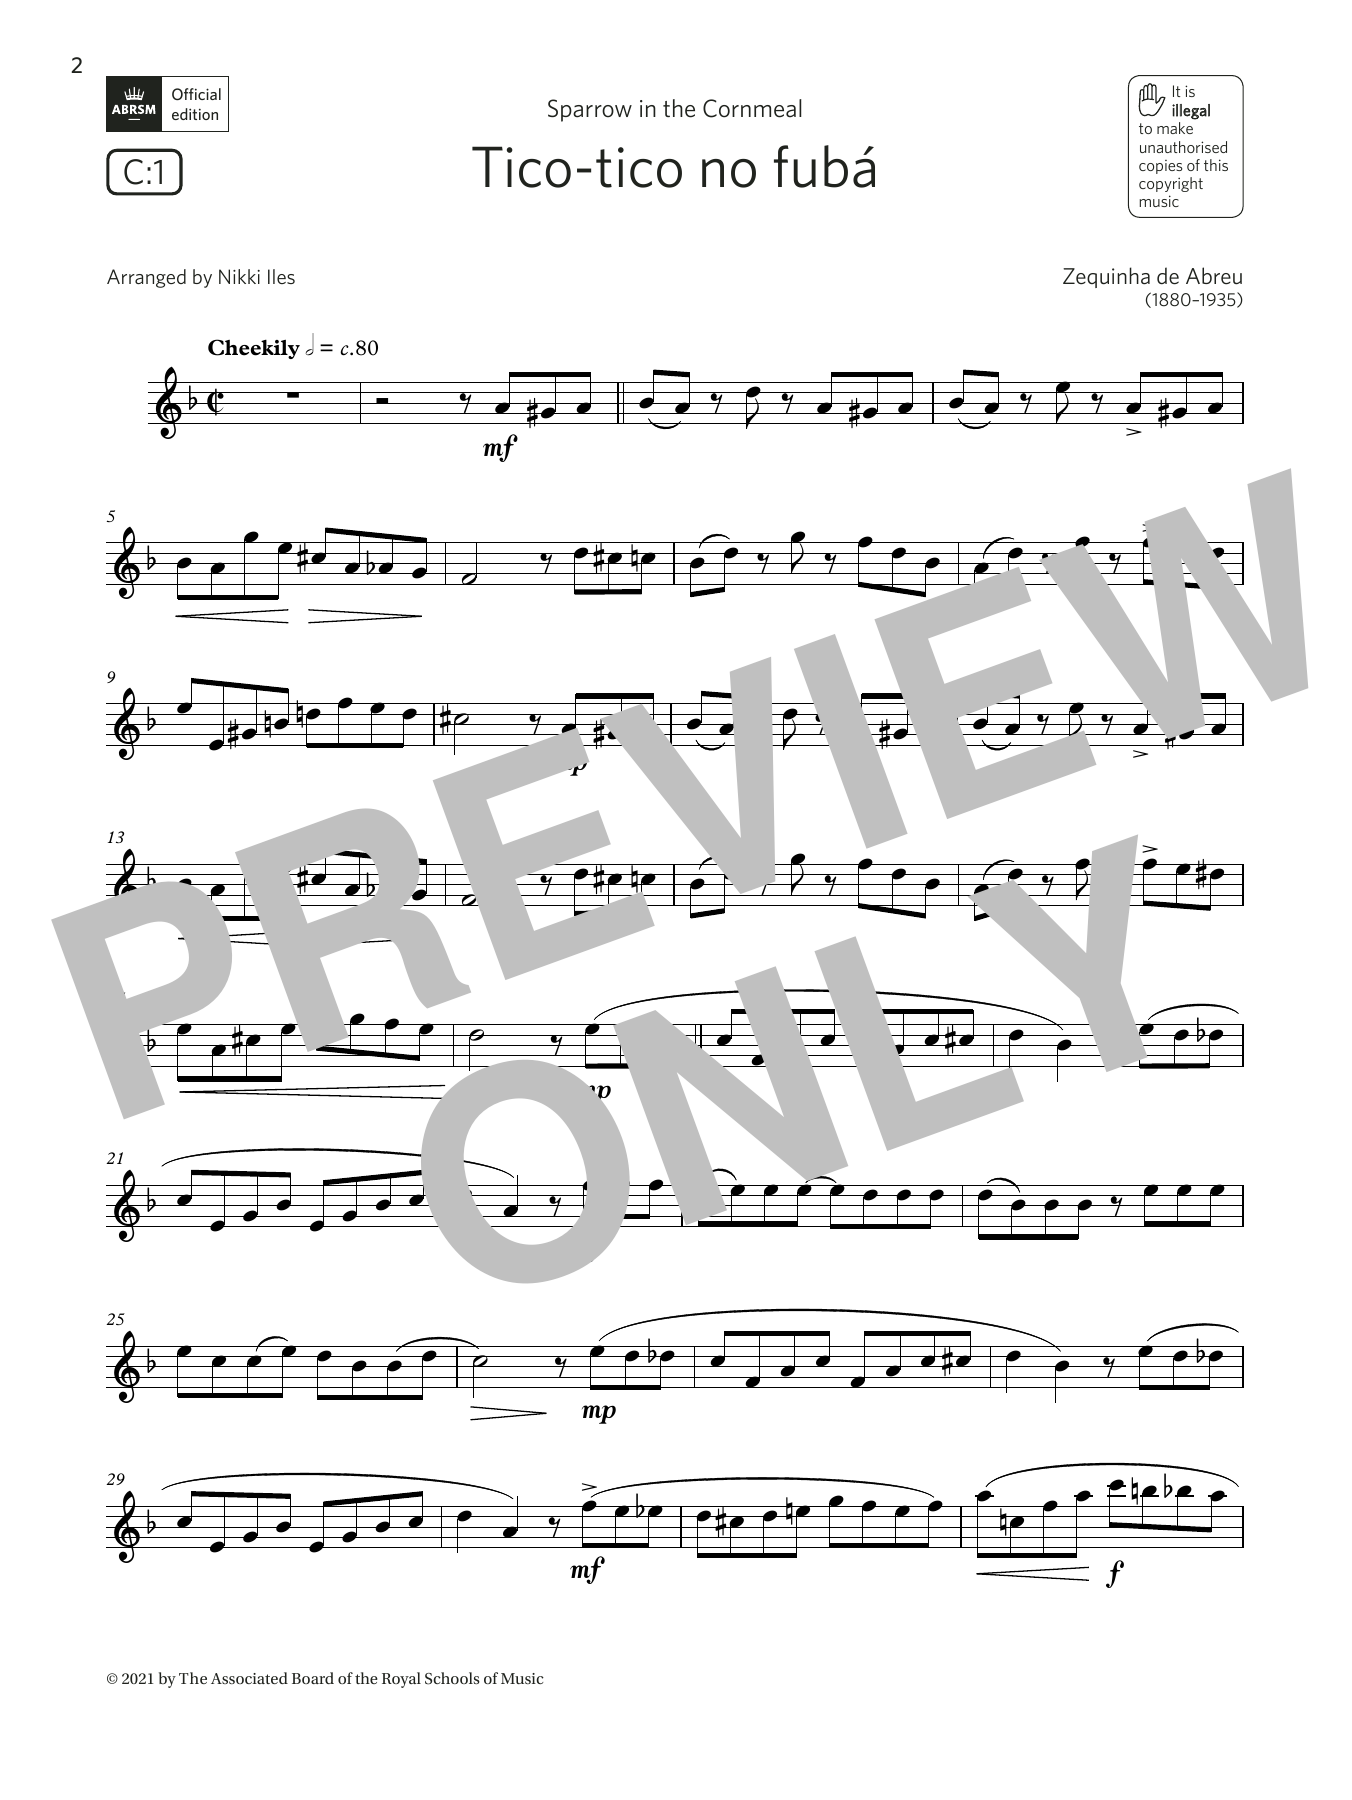 Zequinha de Abreu Tico-tico no fubá (Grade 5 List C1 from the ABRSM Flute syllabus from 2022) Sheet Music Notes & Chords for Flute Solo - Download or Print PDF